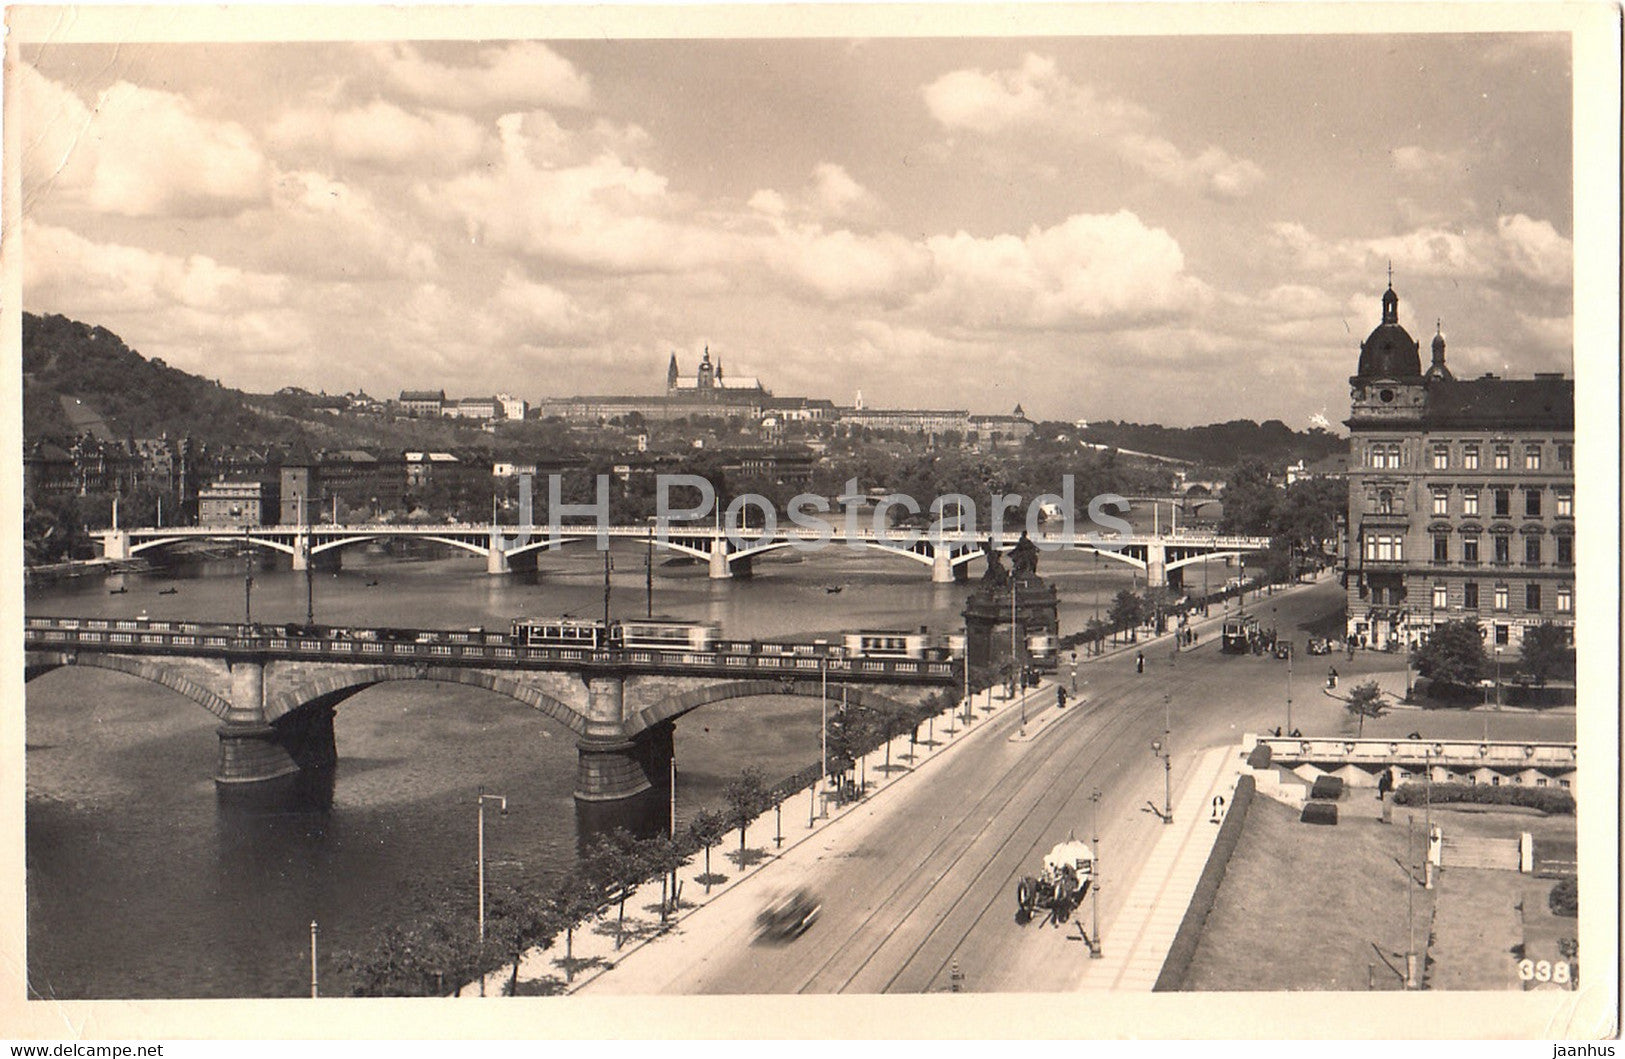 Praha - Prague - Hradcany - Die Burg Hradschin - bridge - old postcard -  1941 - Czechoslovakia - Czech Republic - used - JH Postcards